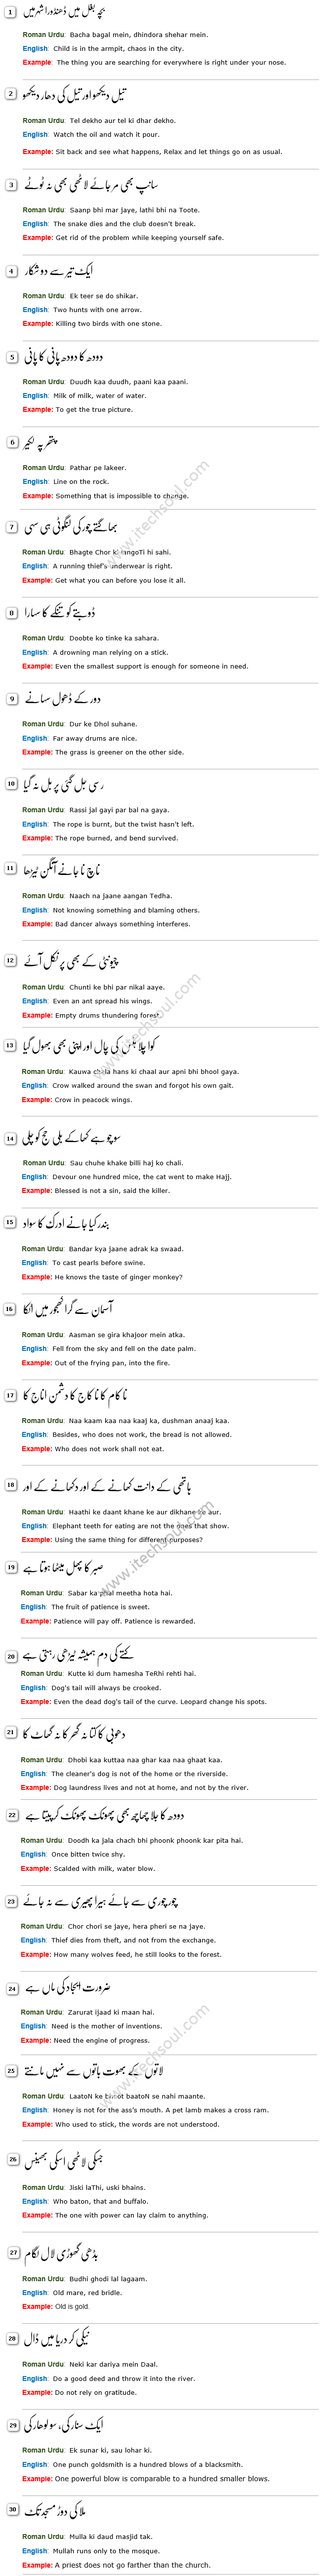 Urdu Proverbs